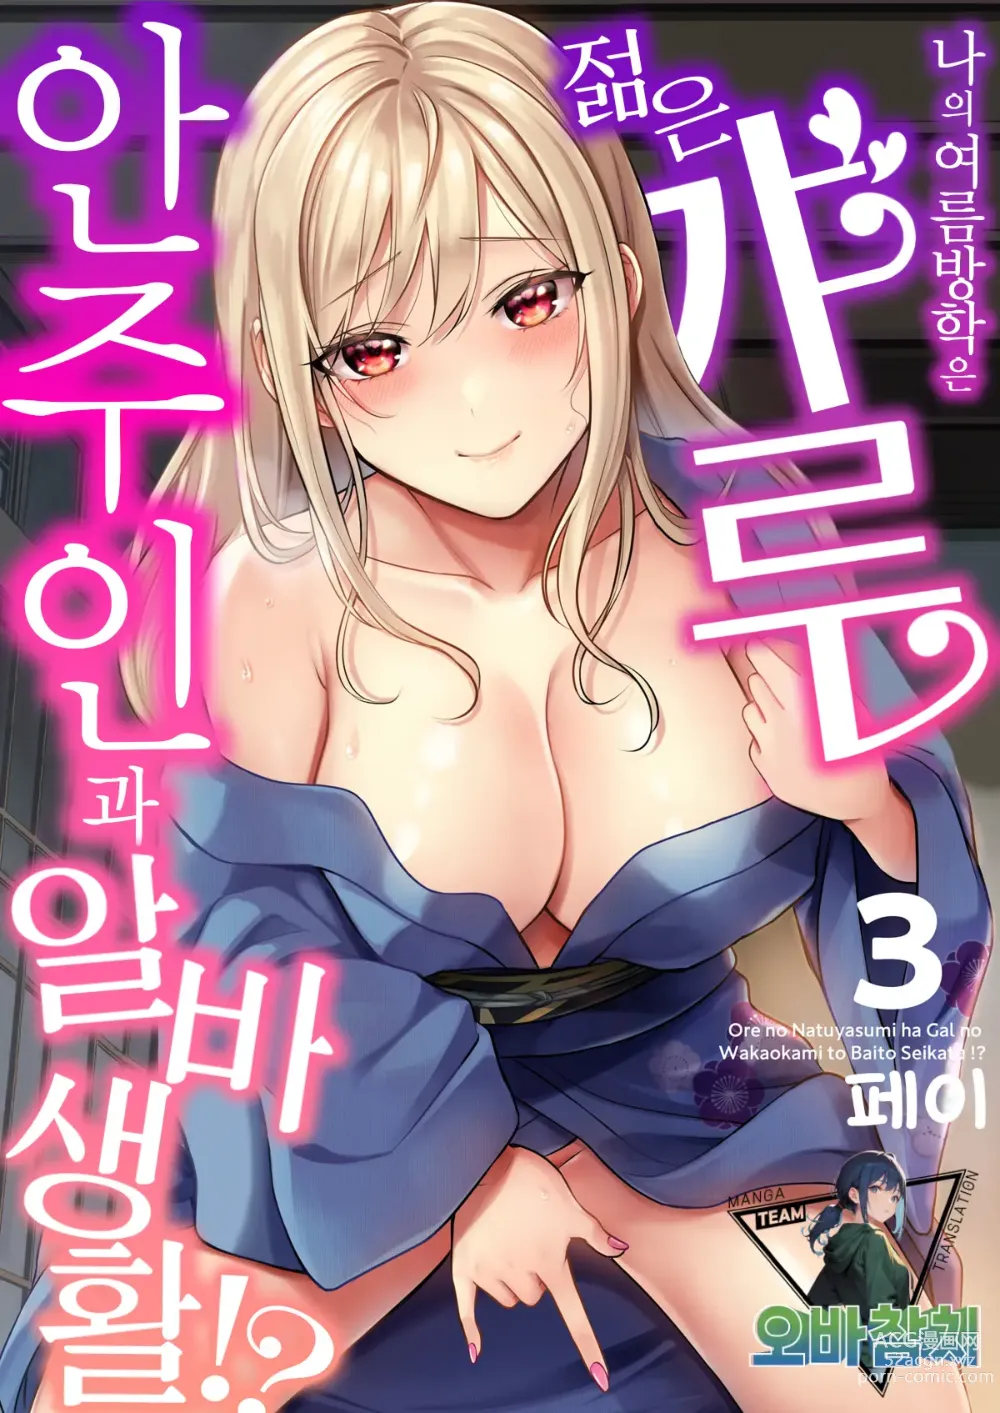 Page 1 of manga 내 여름방학은 젊은 갸루 안주인과 알바 생활?! 3